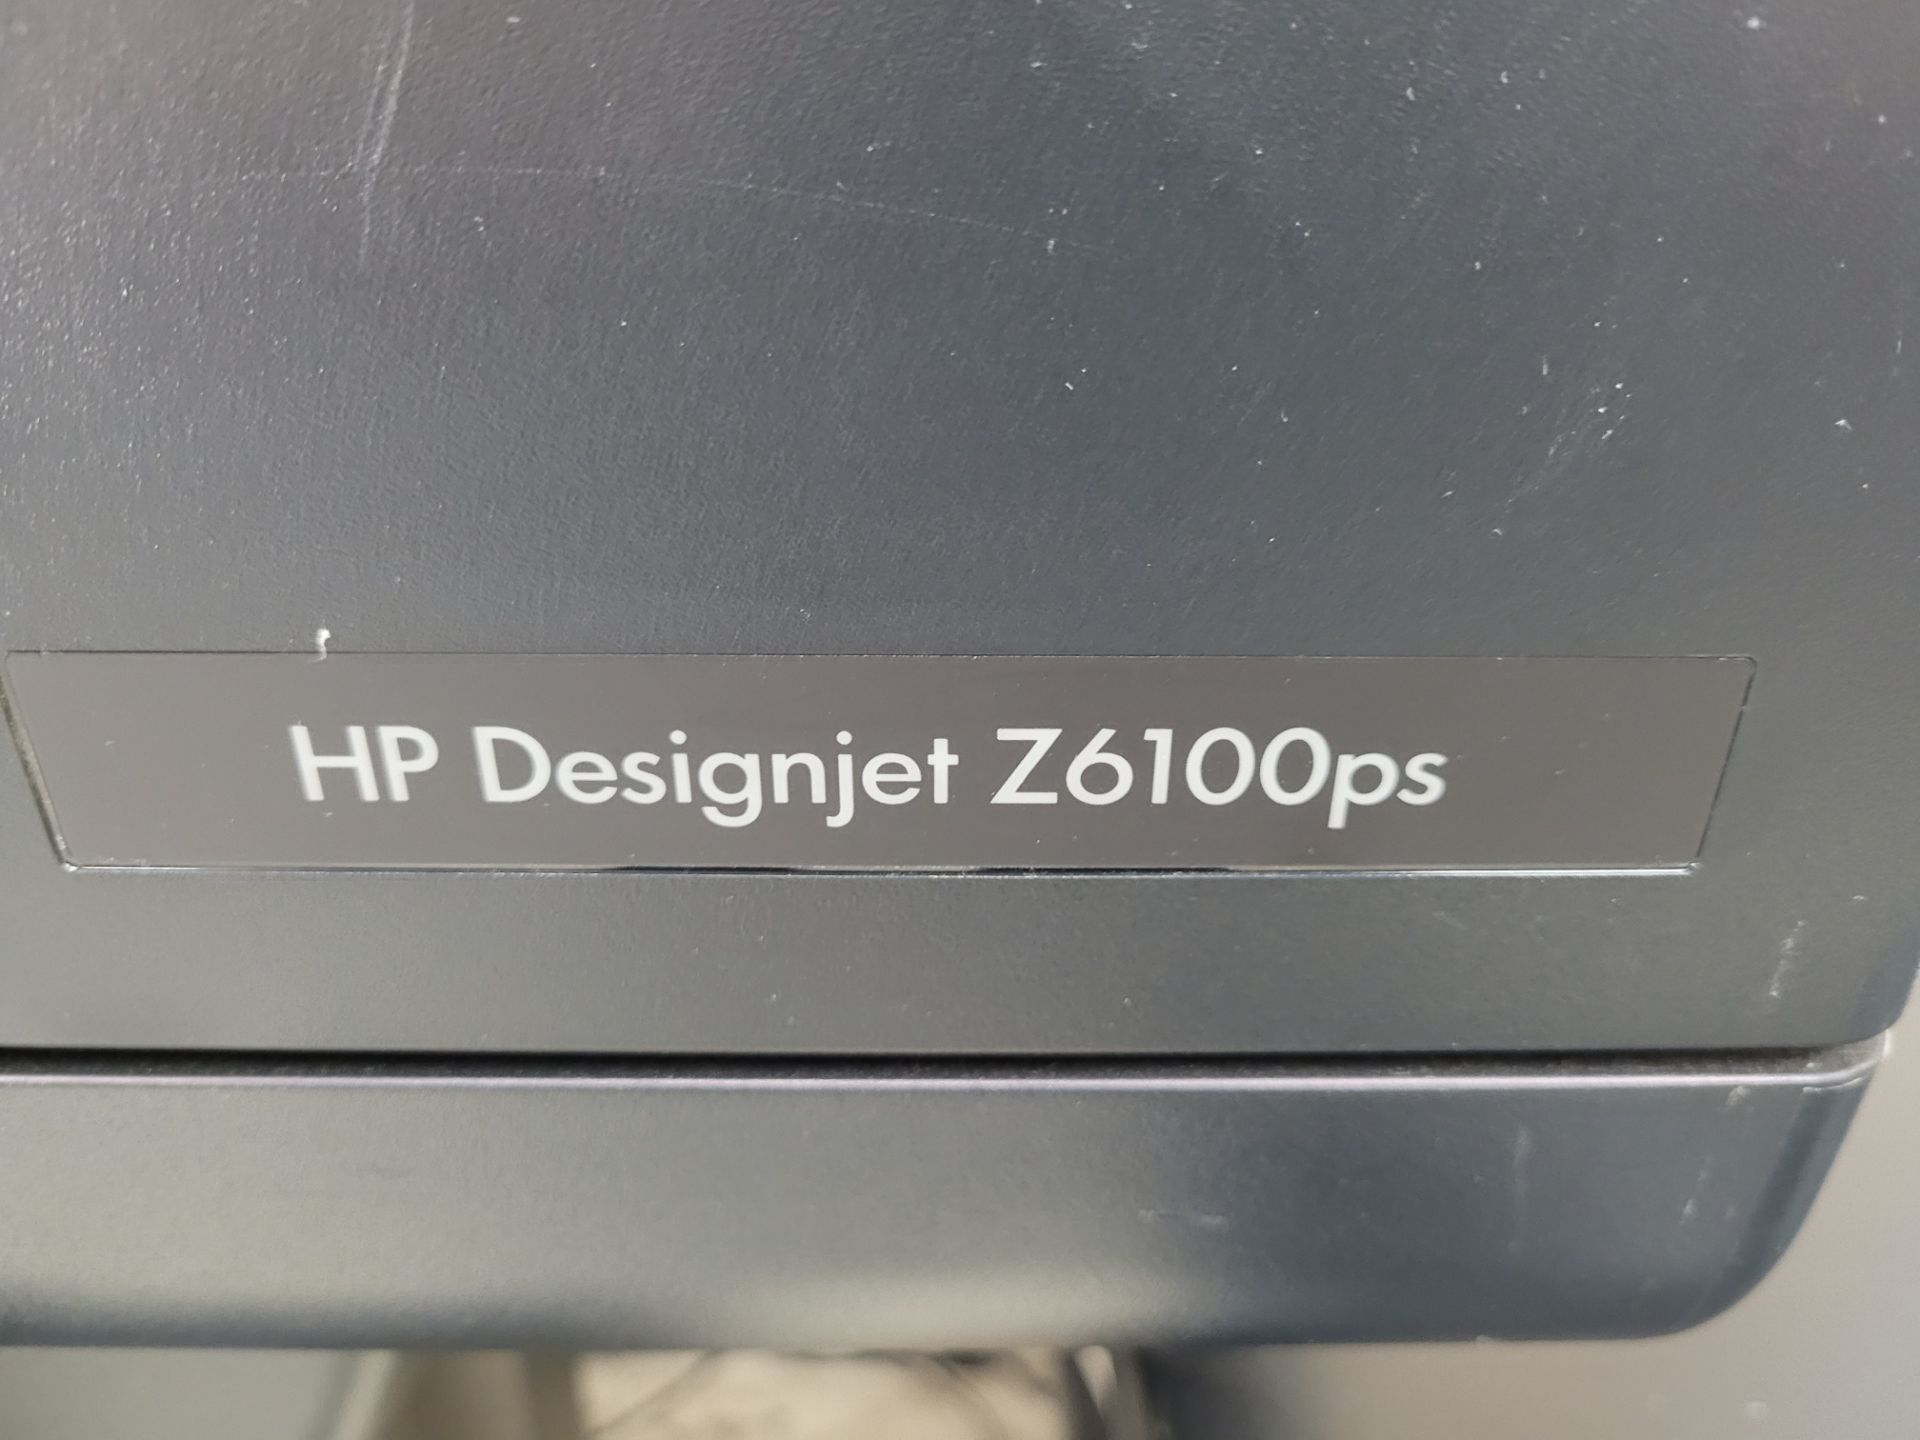 HP Designjet Z61100ps Large Format 60" Printer / Plotter mod. Q6654A, ser. SG7CS2900W, factory mod. - Image 4 of 12